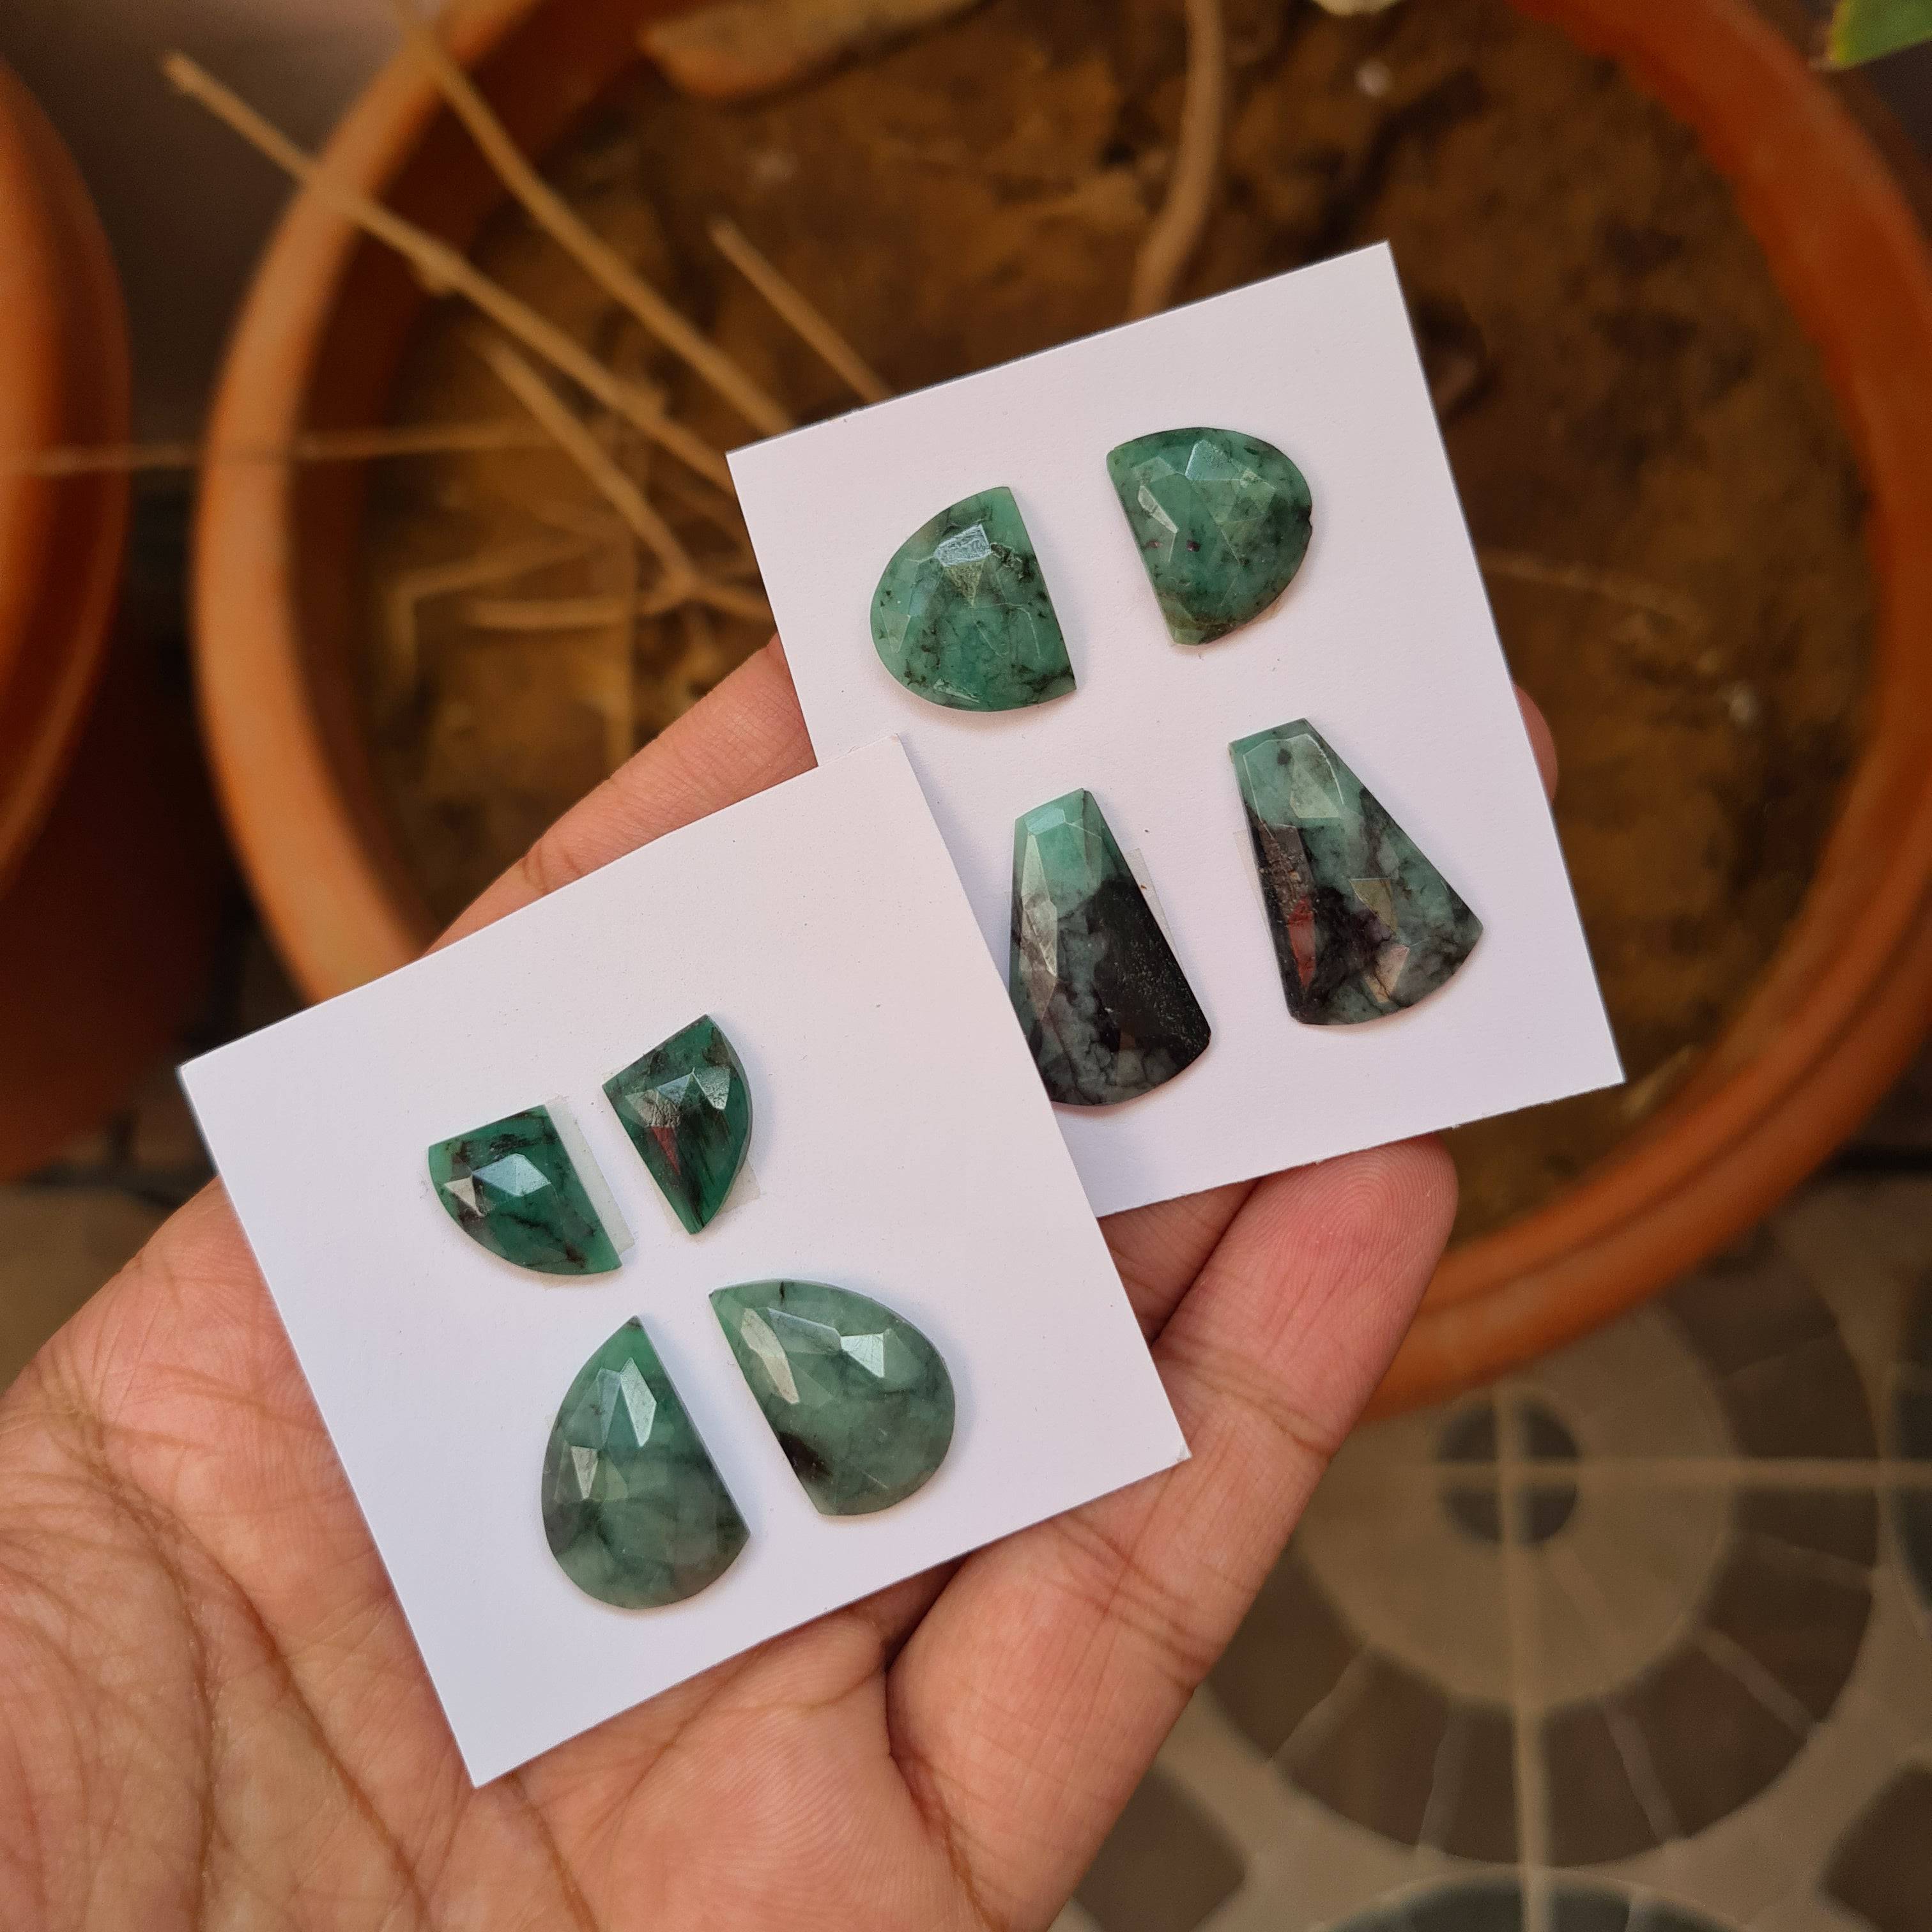 2 Lots 8 pcs Pcs Mozambique Natural Emerald Stone Pairs with Flat backs |Fancy shape13-19mm Size - The LabradoriteKing